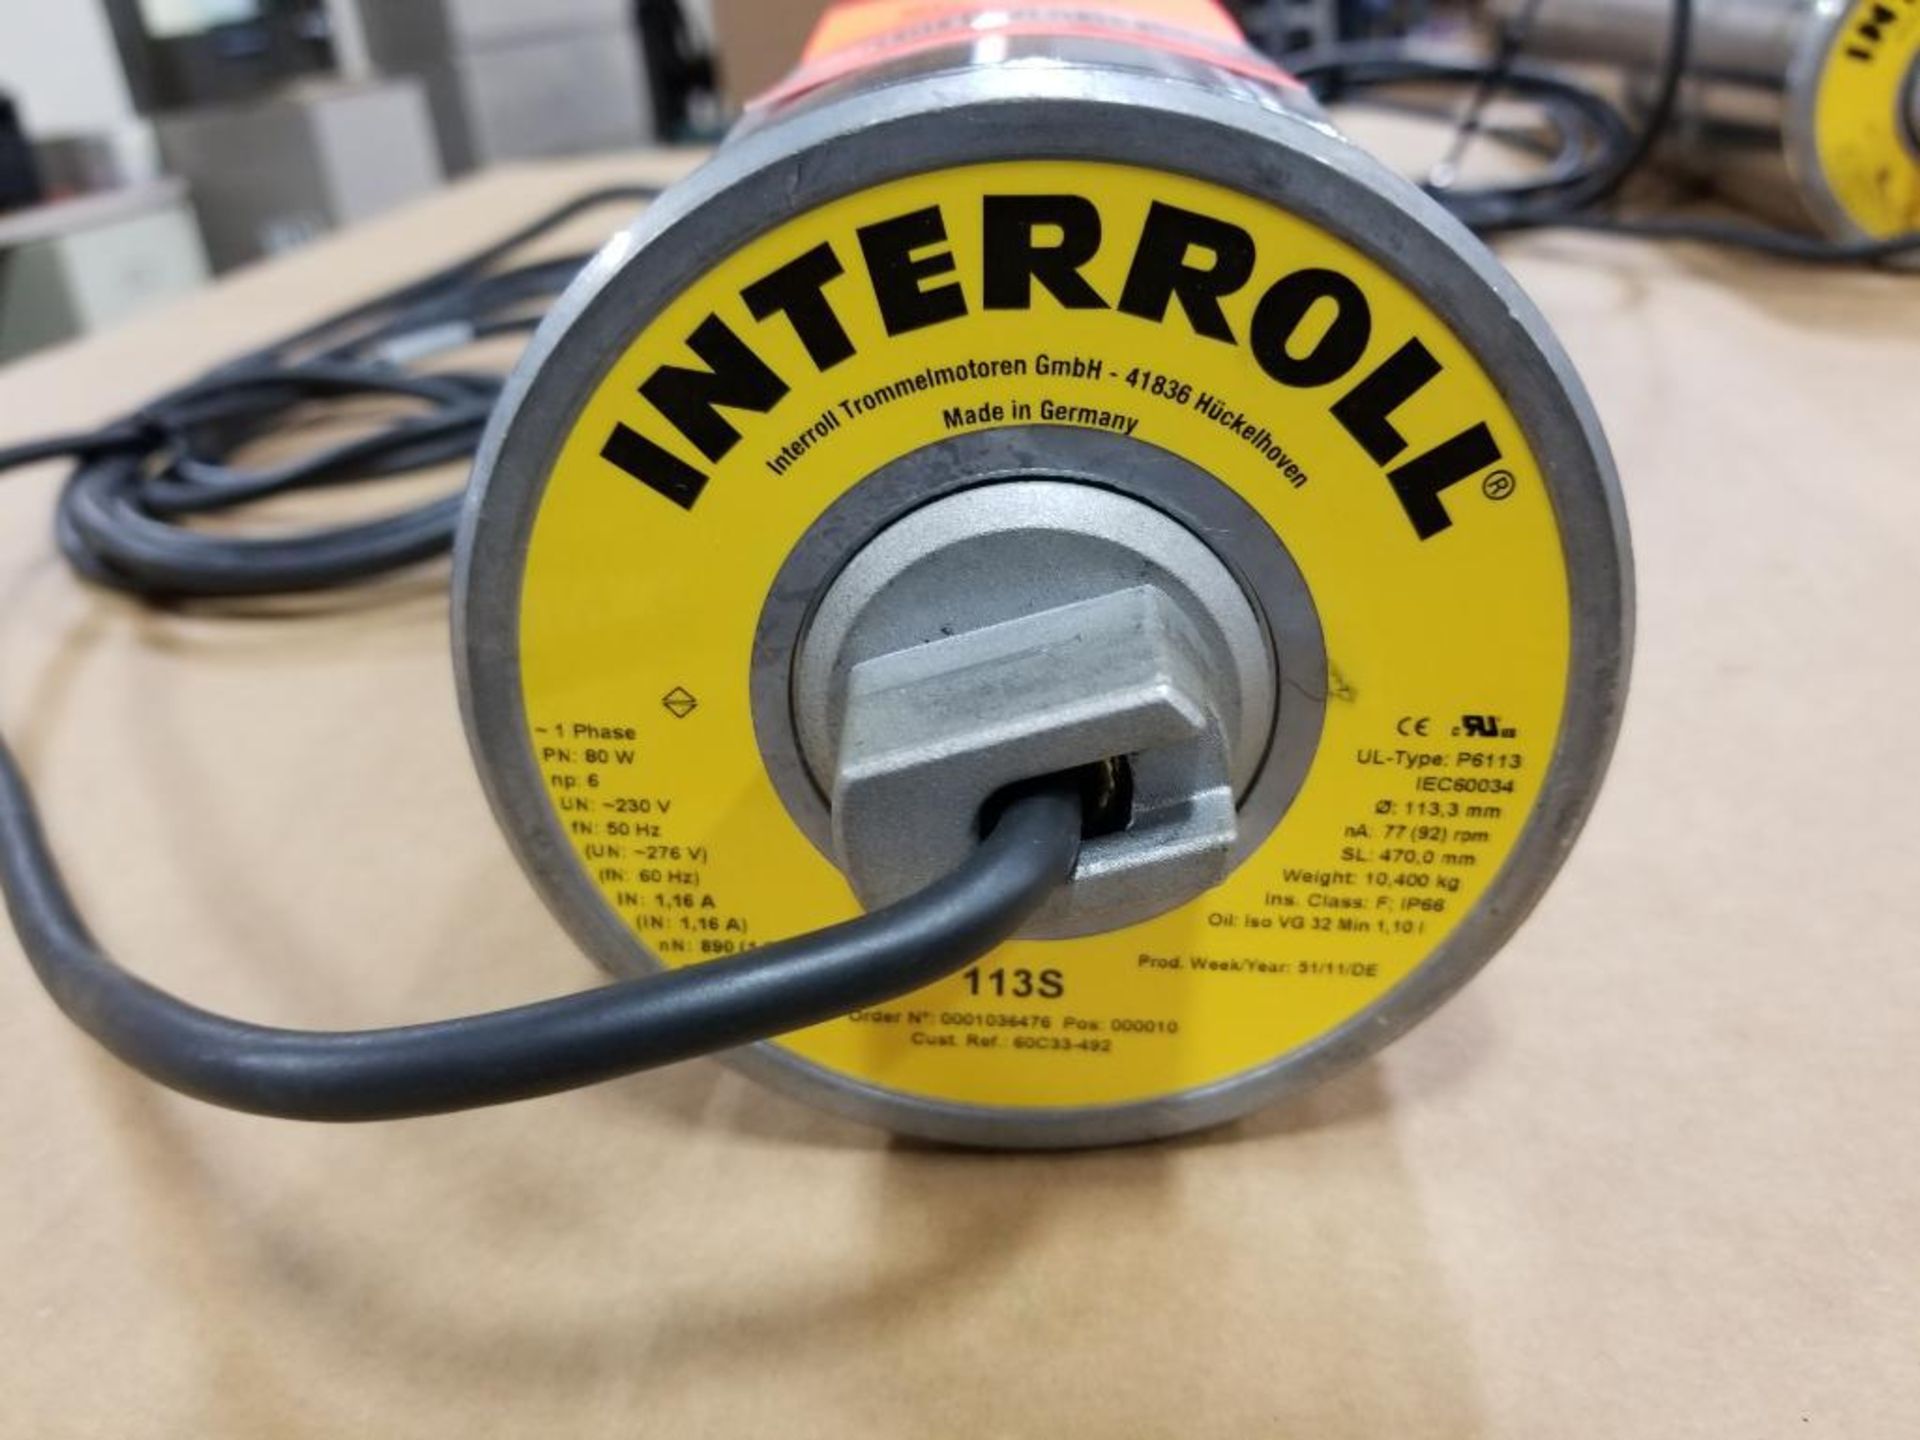 Interroll P6113 conveyor belt drum motor. - Image 2 of 4